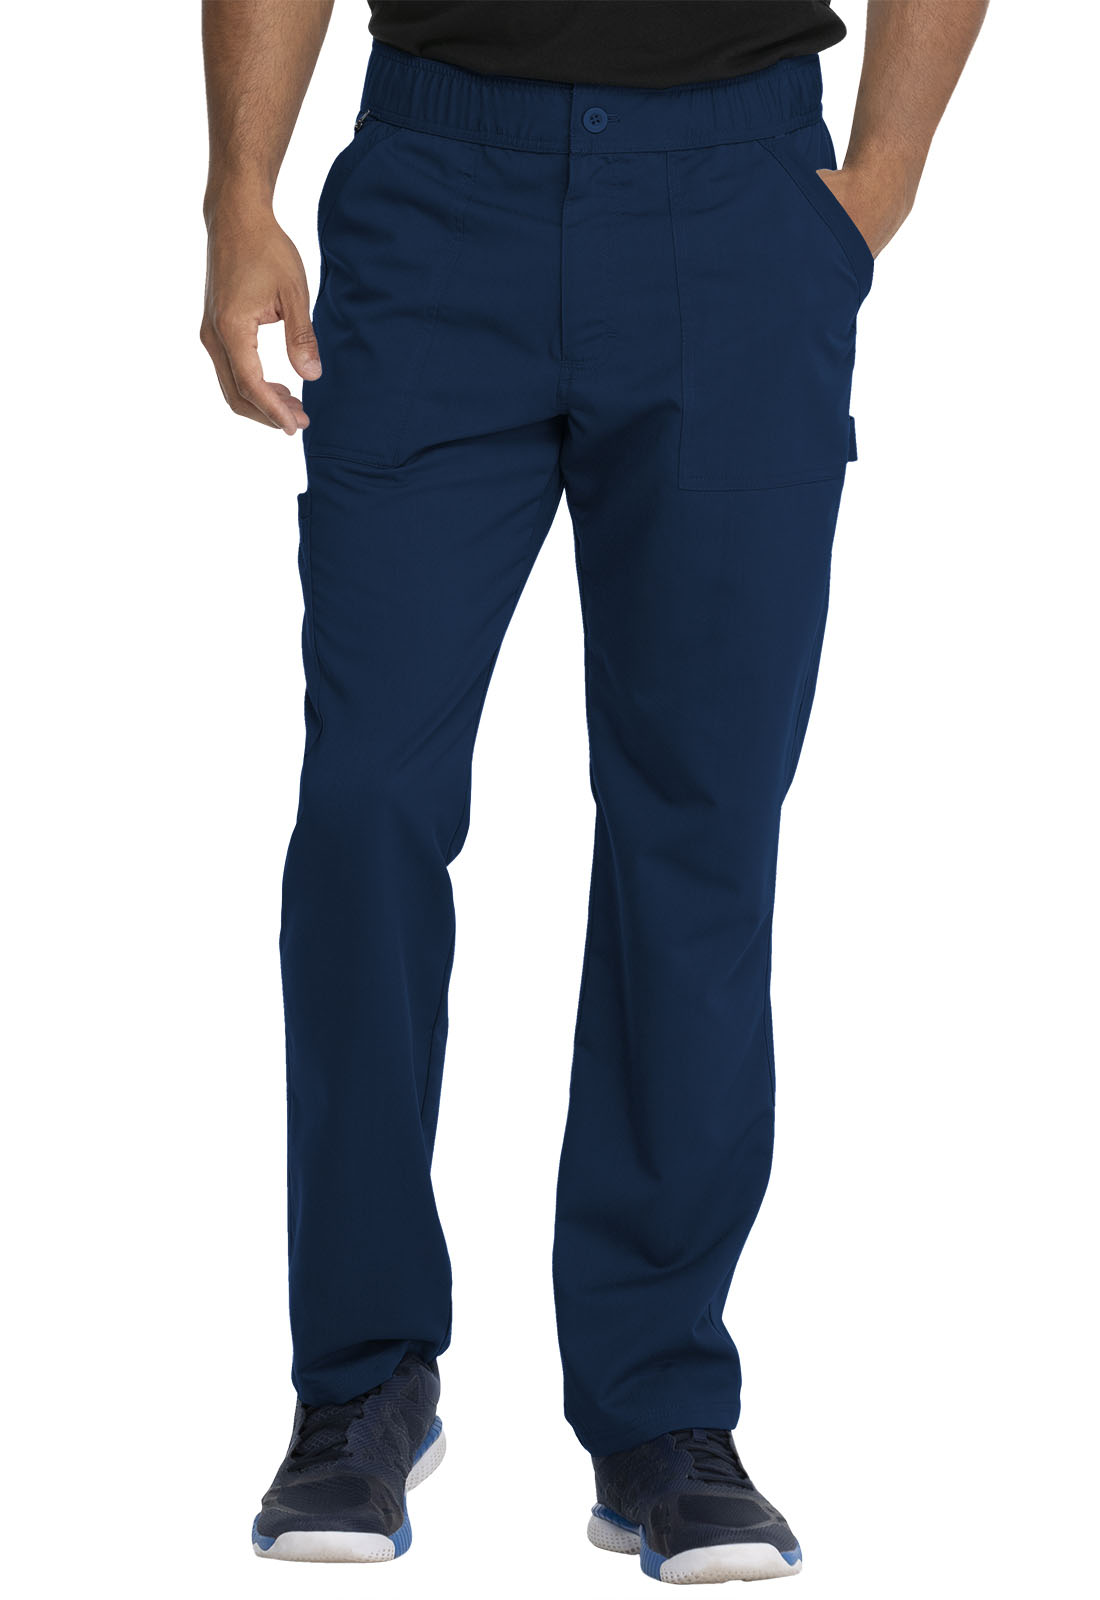 Мужские медицинские брюки DK220S Dickies Balance Men's в интернет-бутике Clinic Style